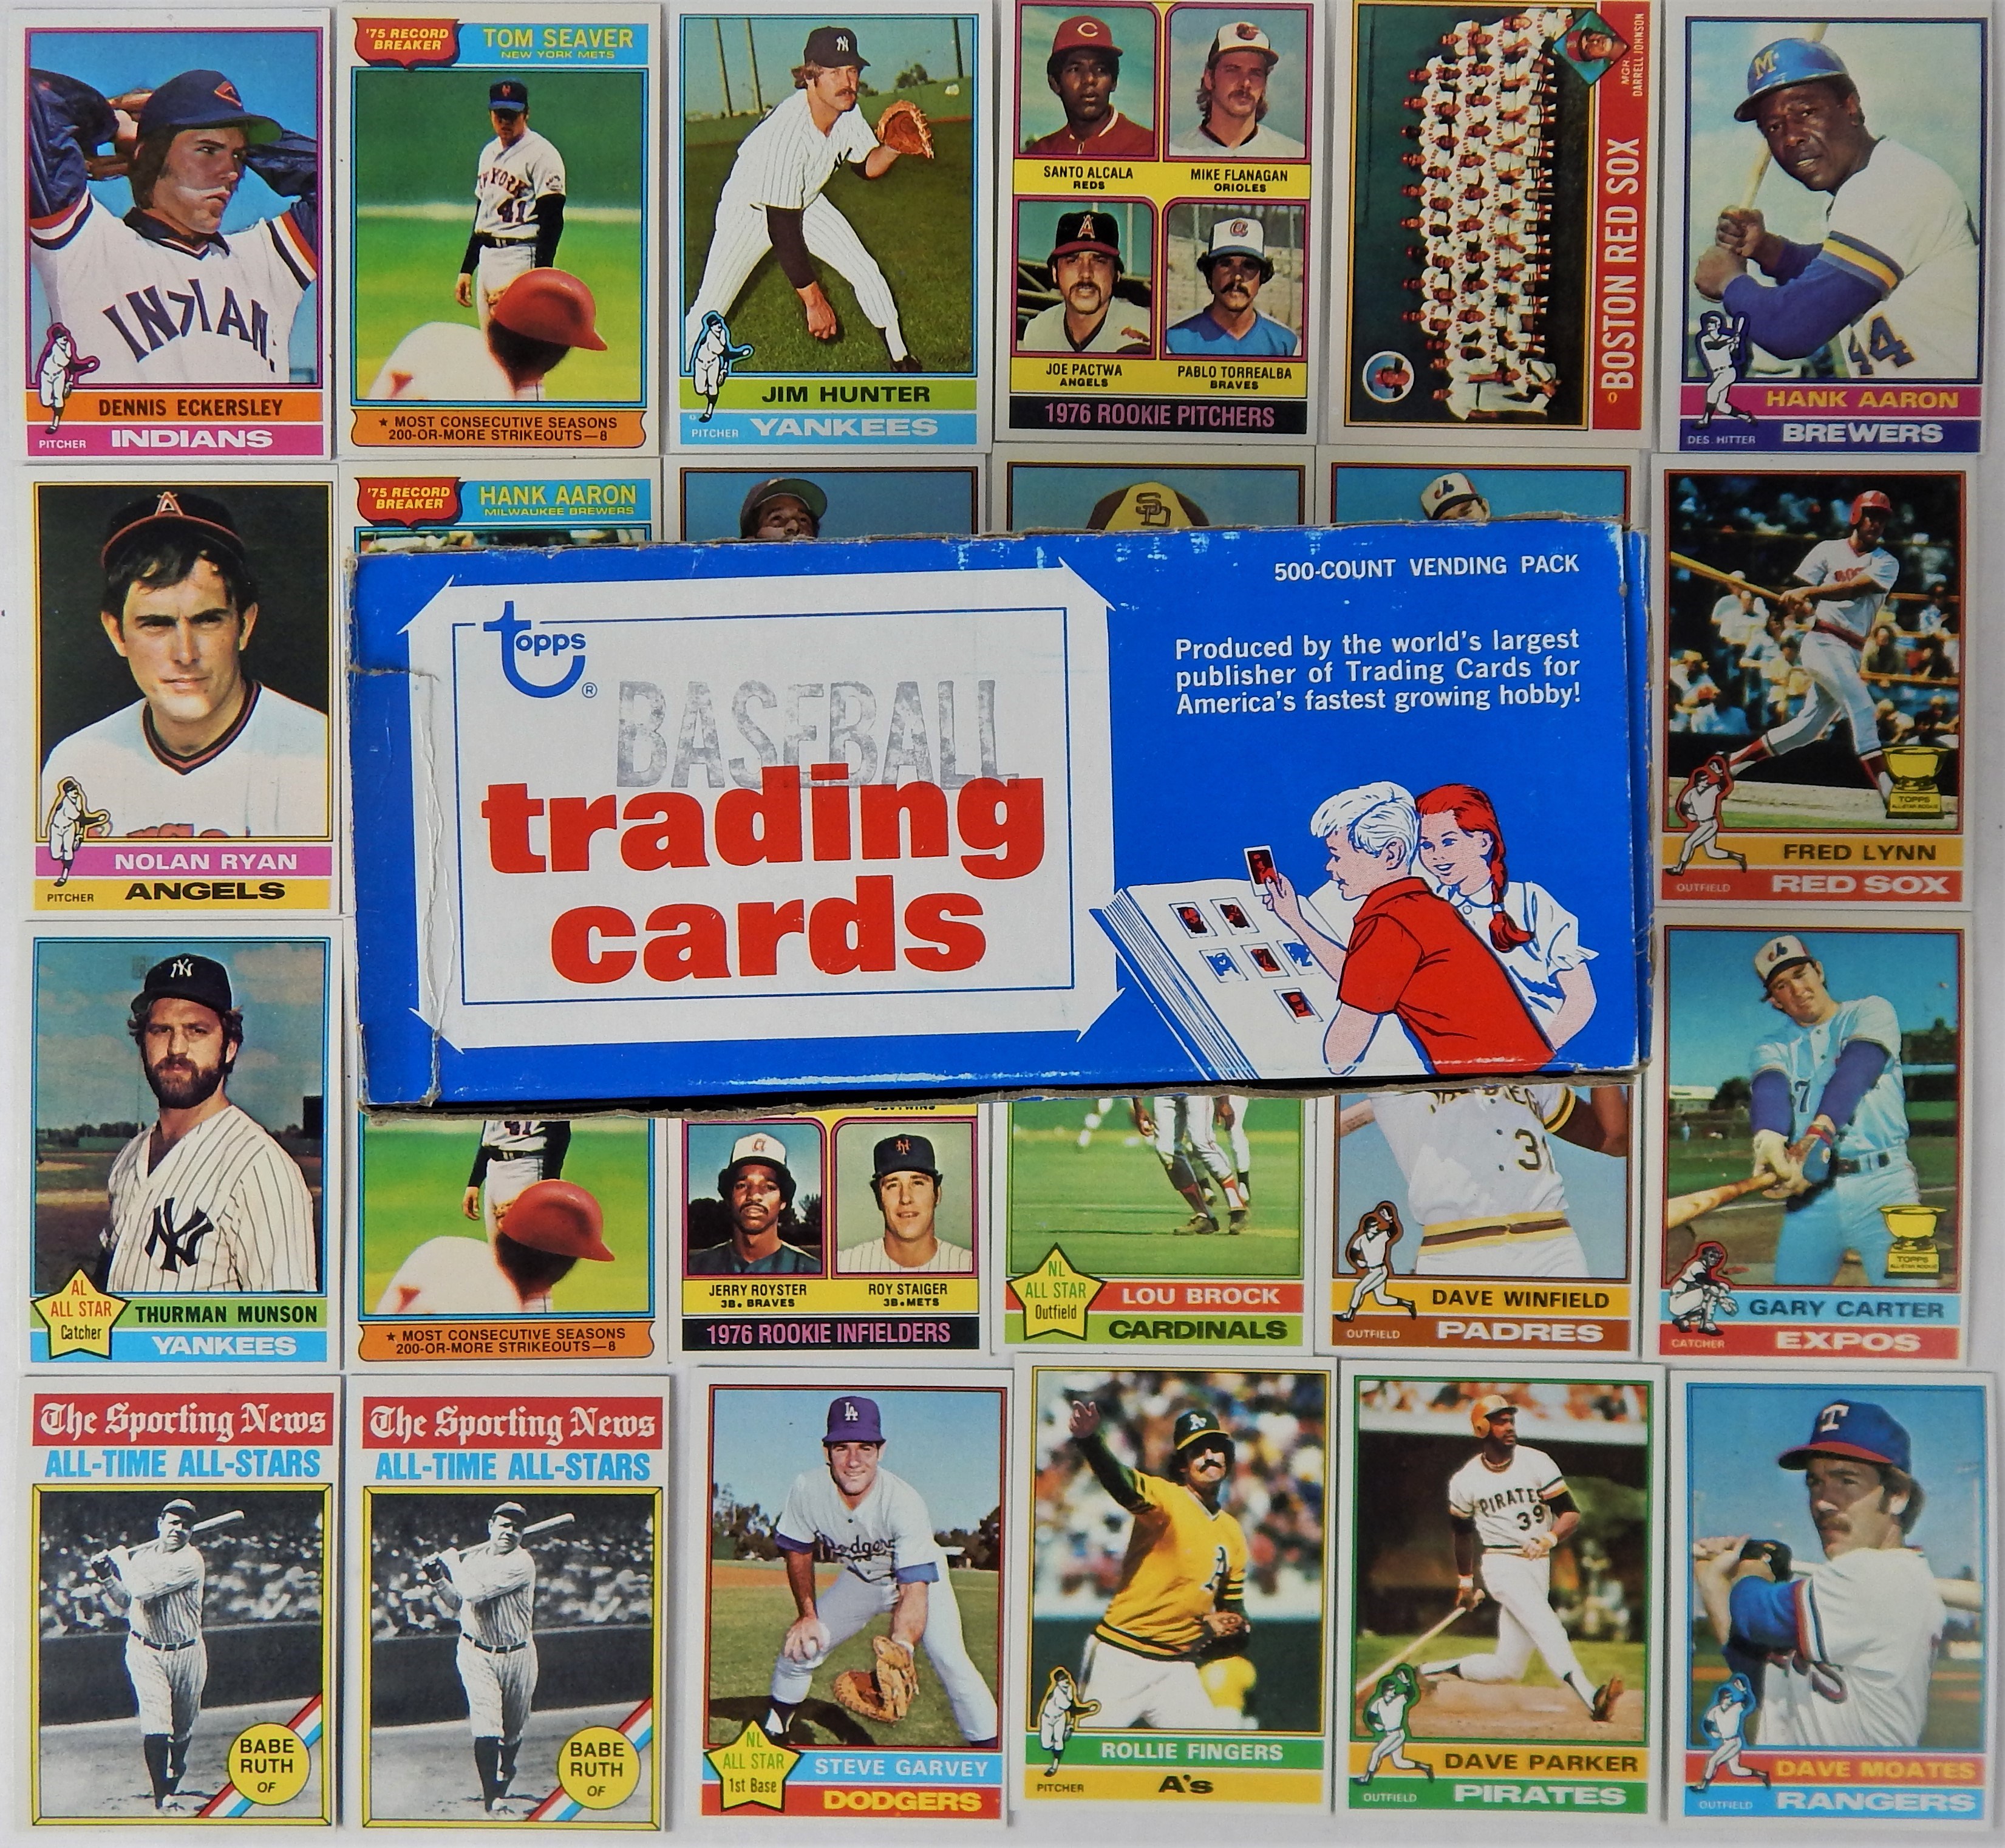 Baseball and Trading Cards - 1976 Topps Baseball Vending Box